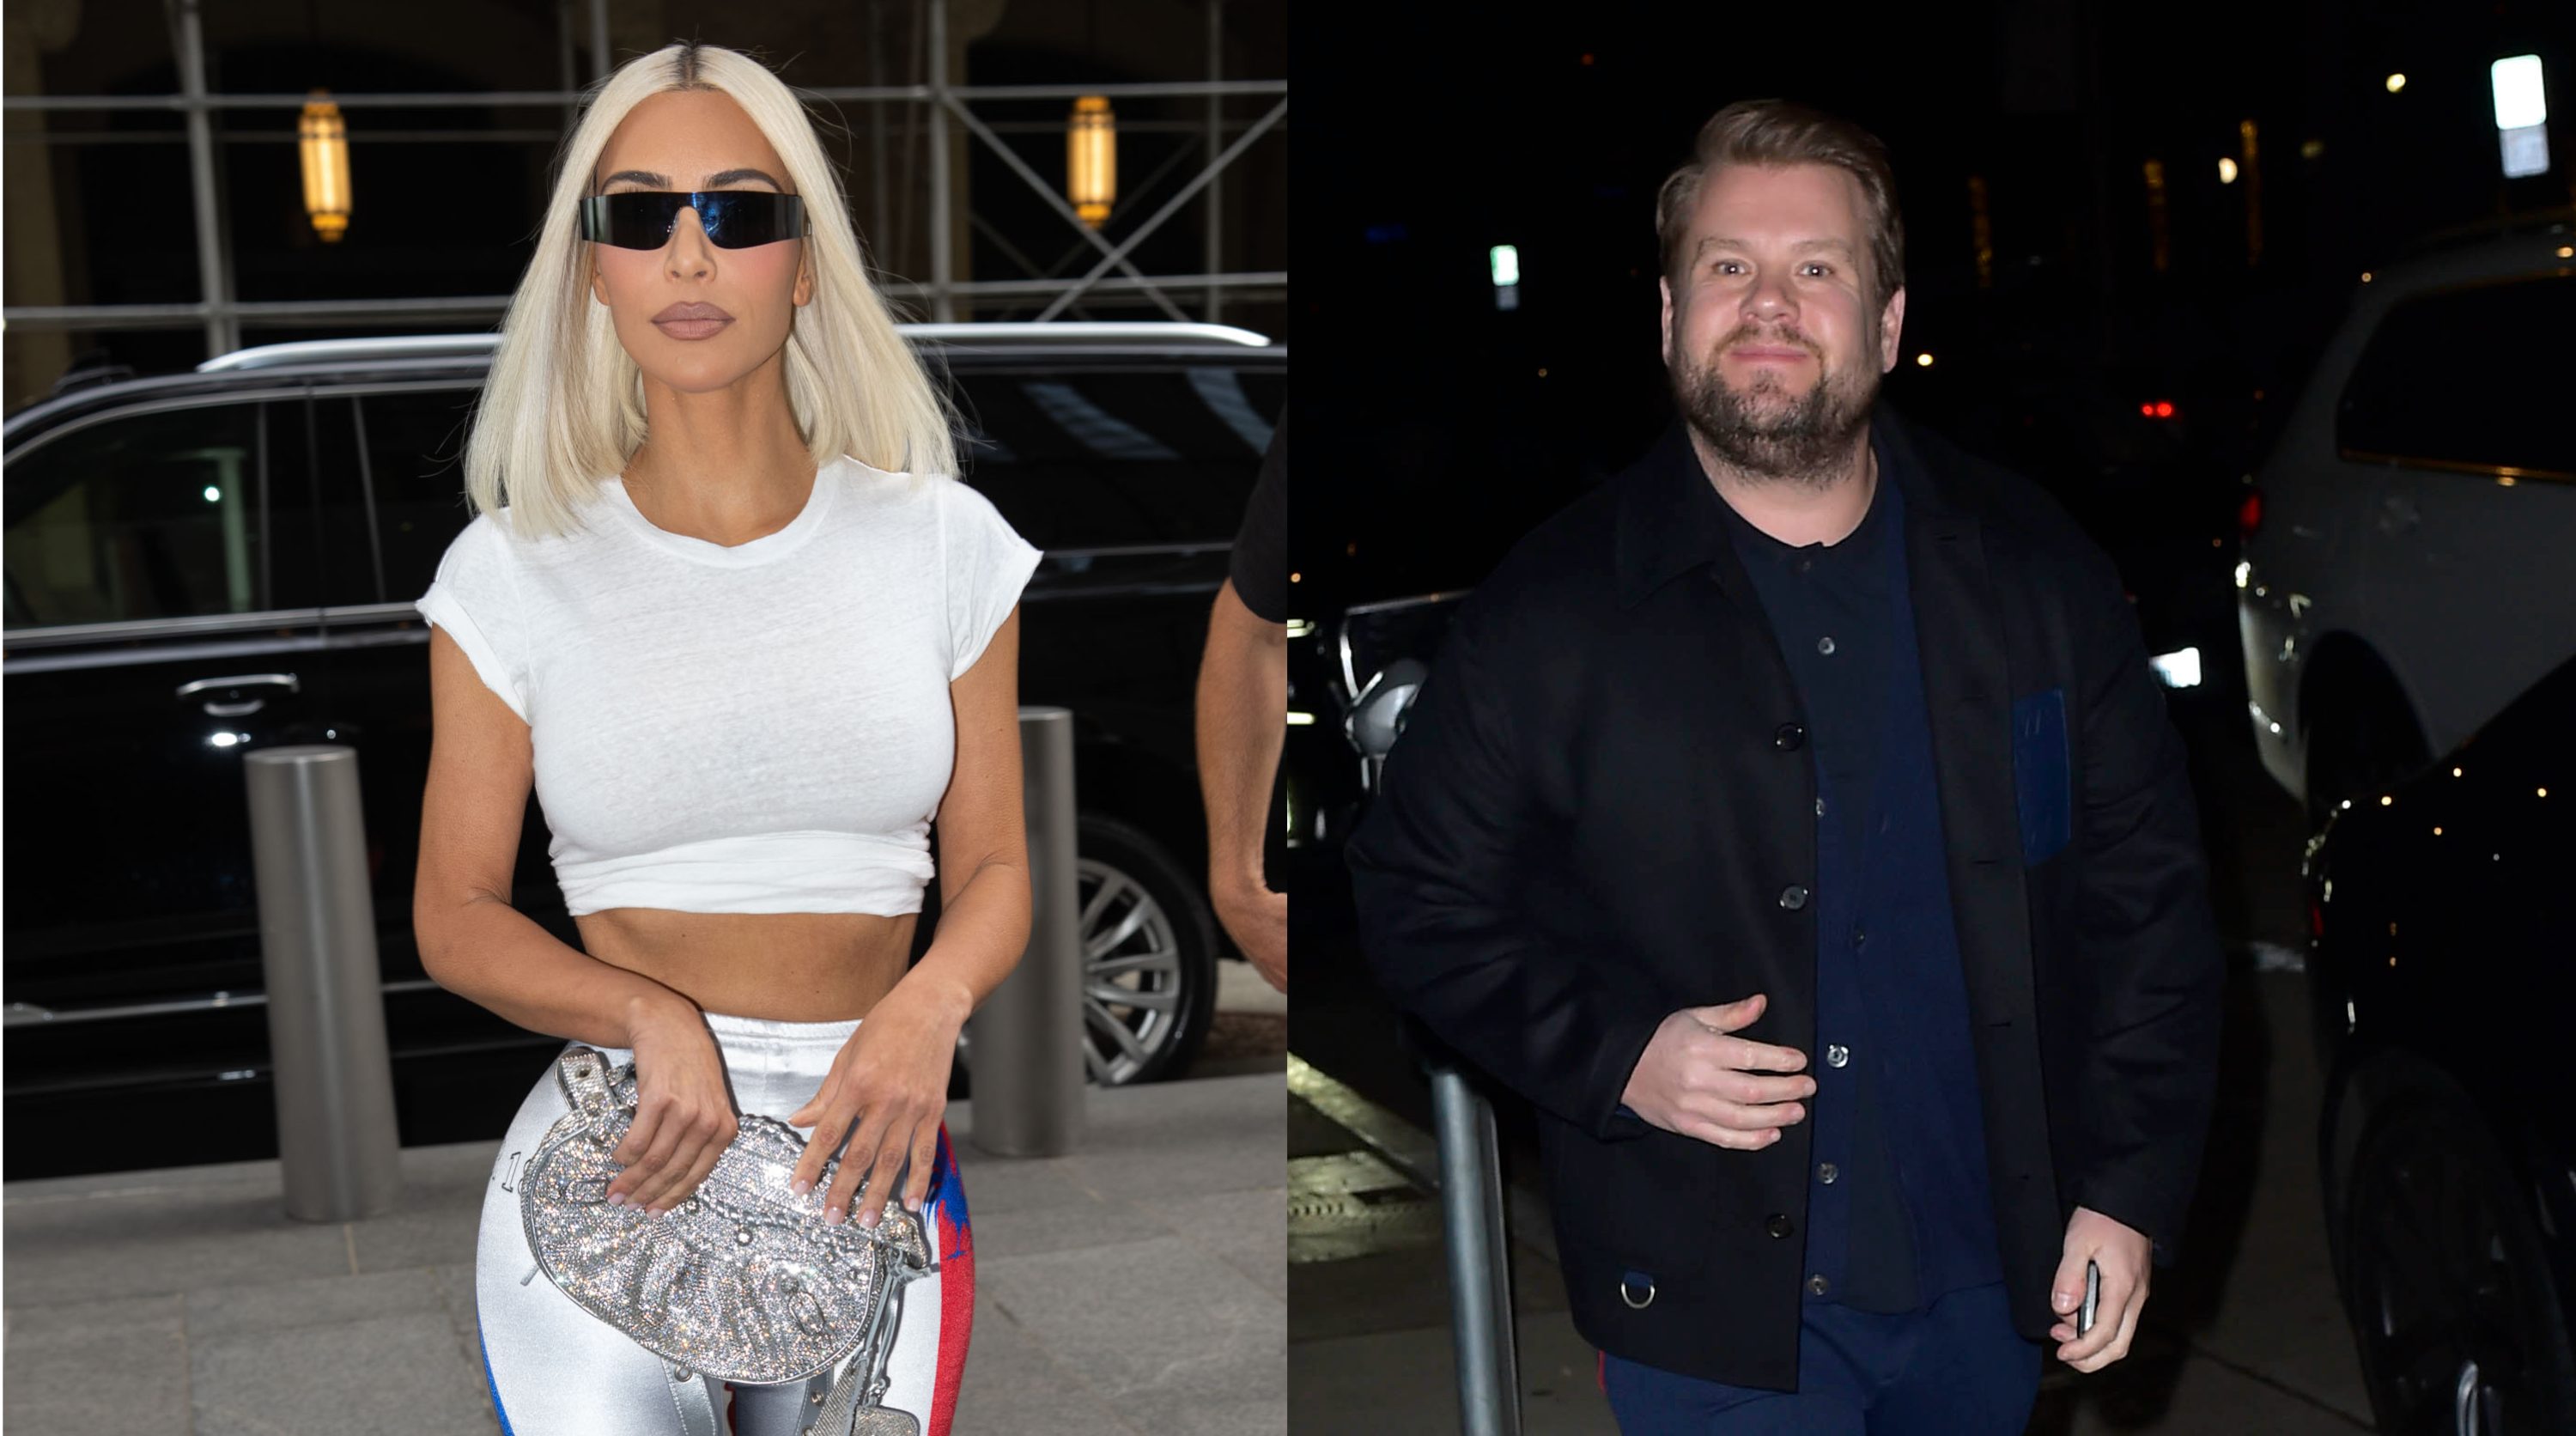 Kim Kardashian & James Corden Link Up For “Carpool Karaoke”